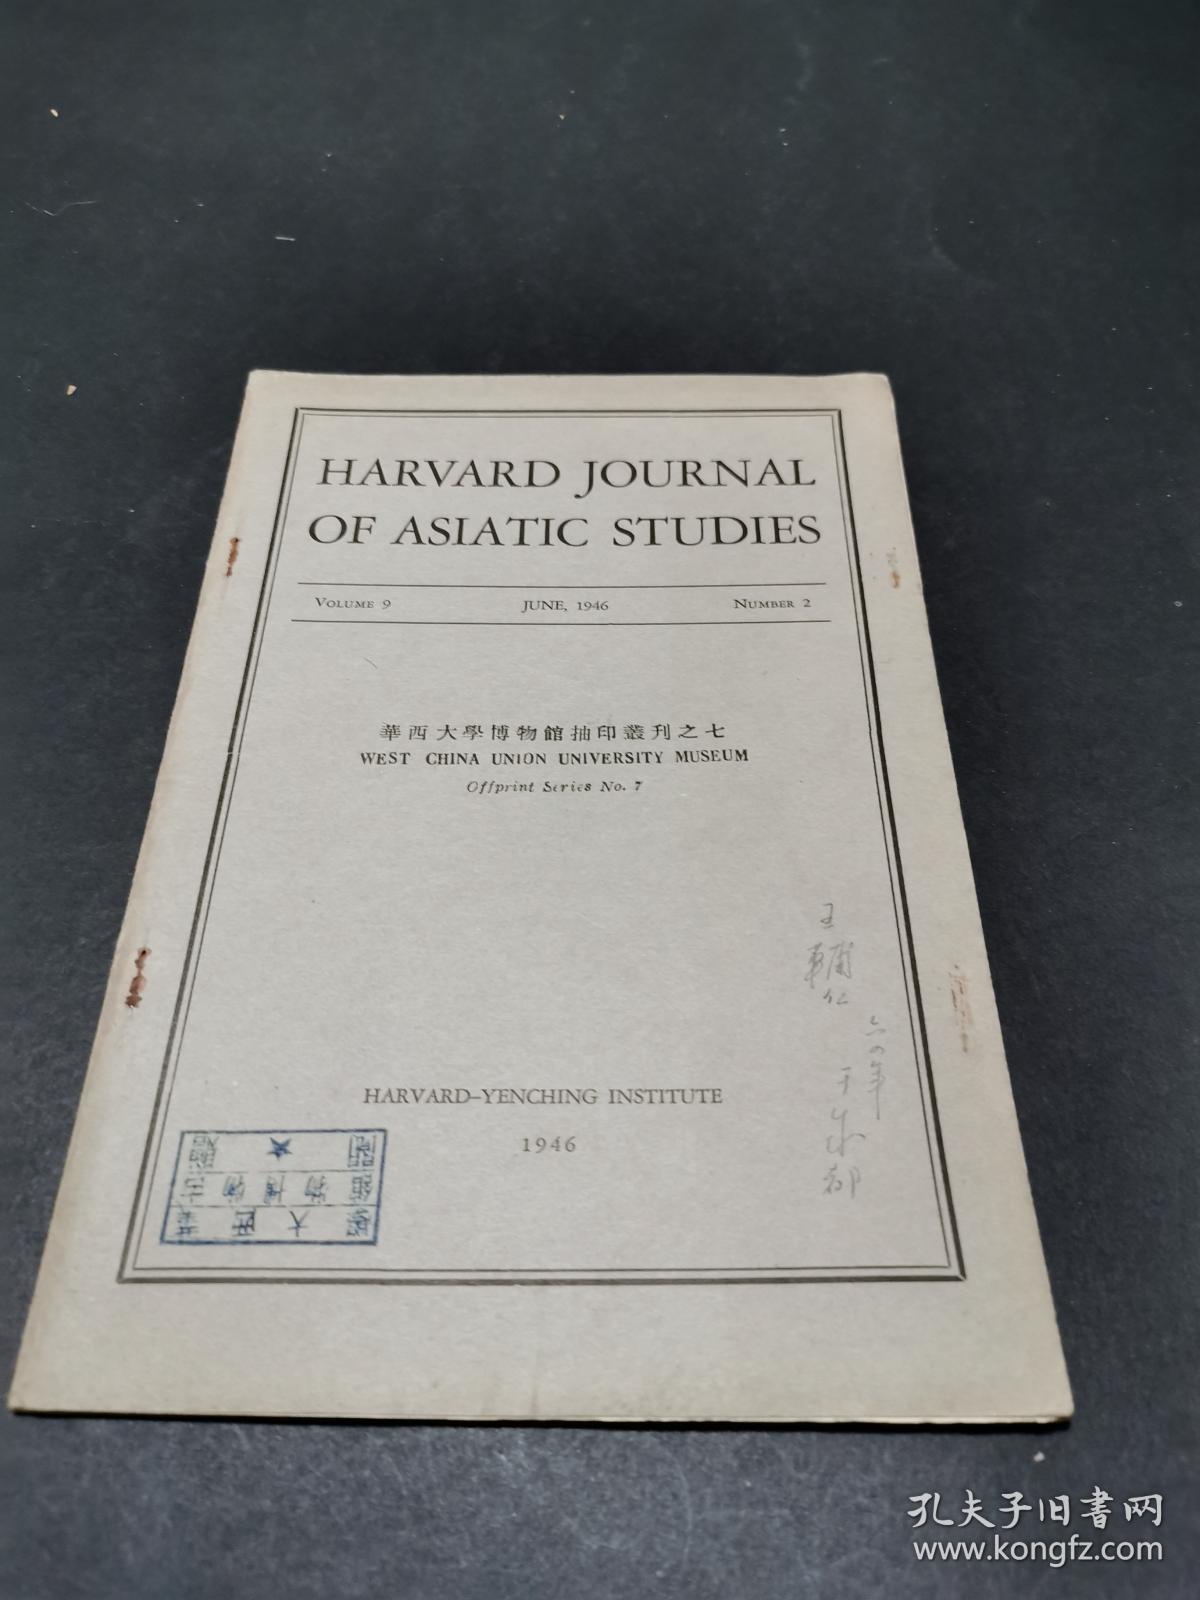 harvard journal of asiatic studies華西大學博物館抽印叢刊之七，鄭德坤著作（王輔仁舊藏簽名）